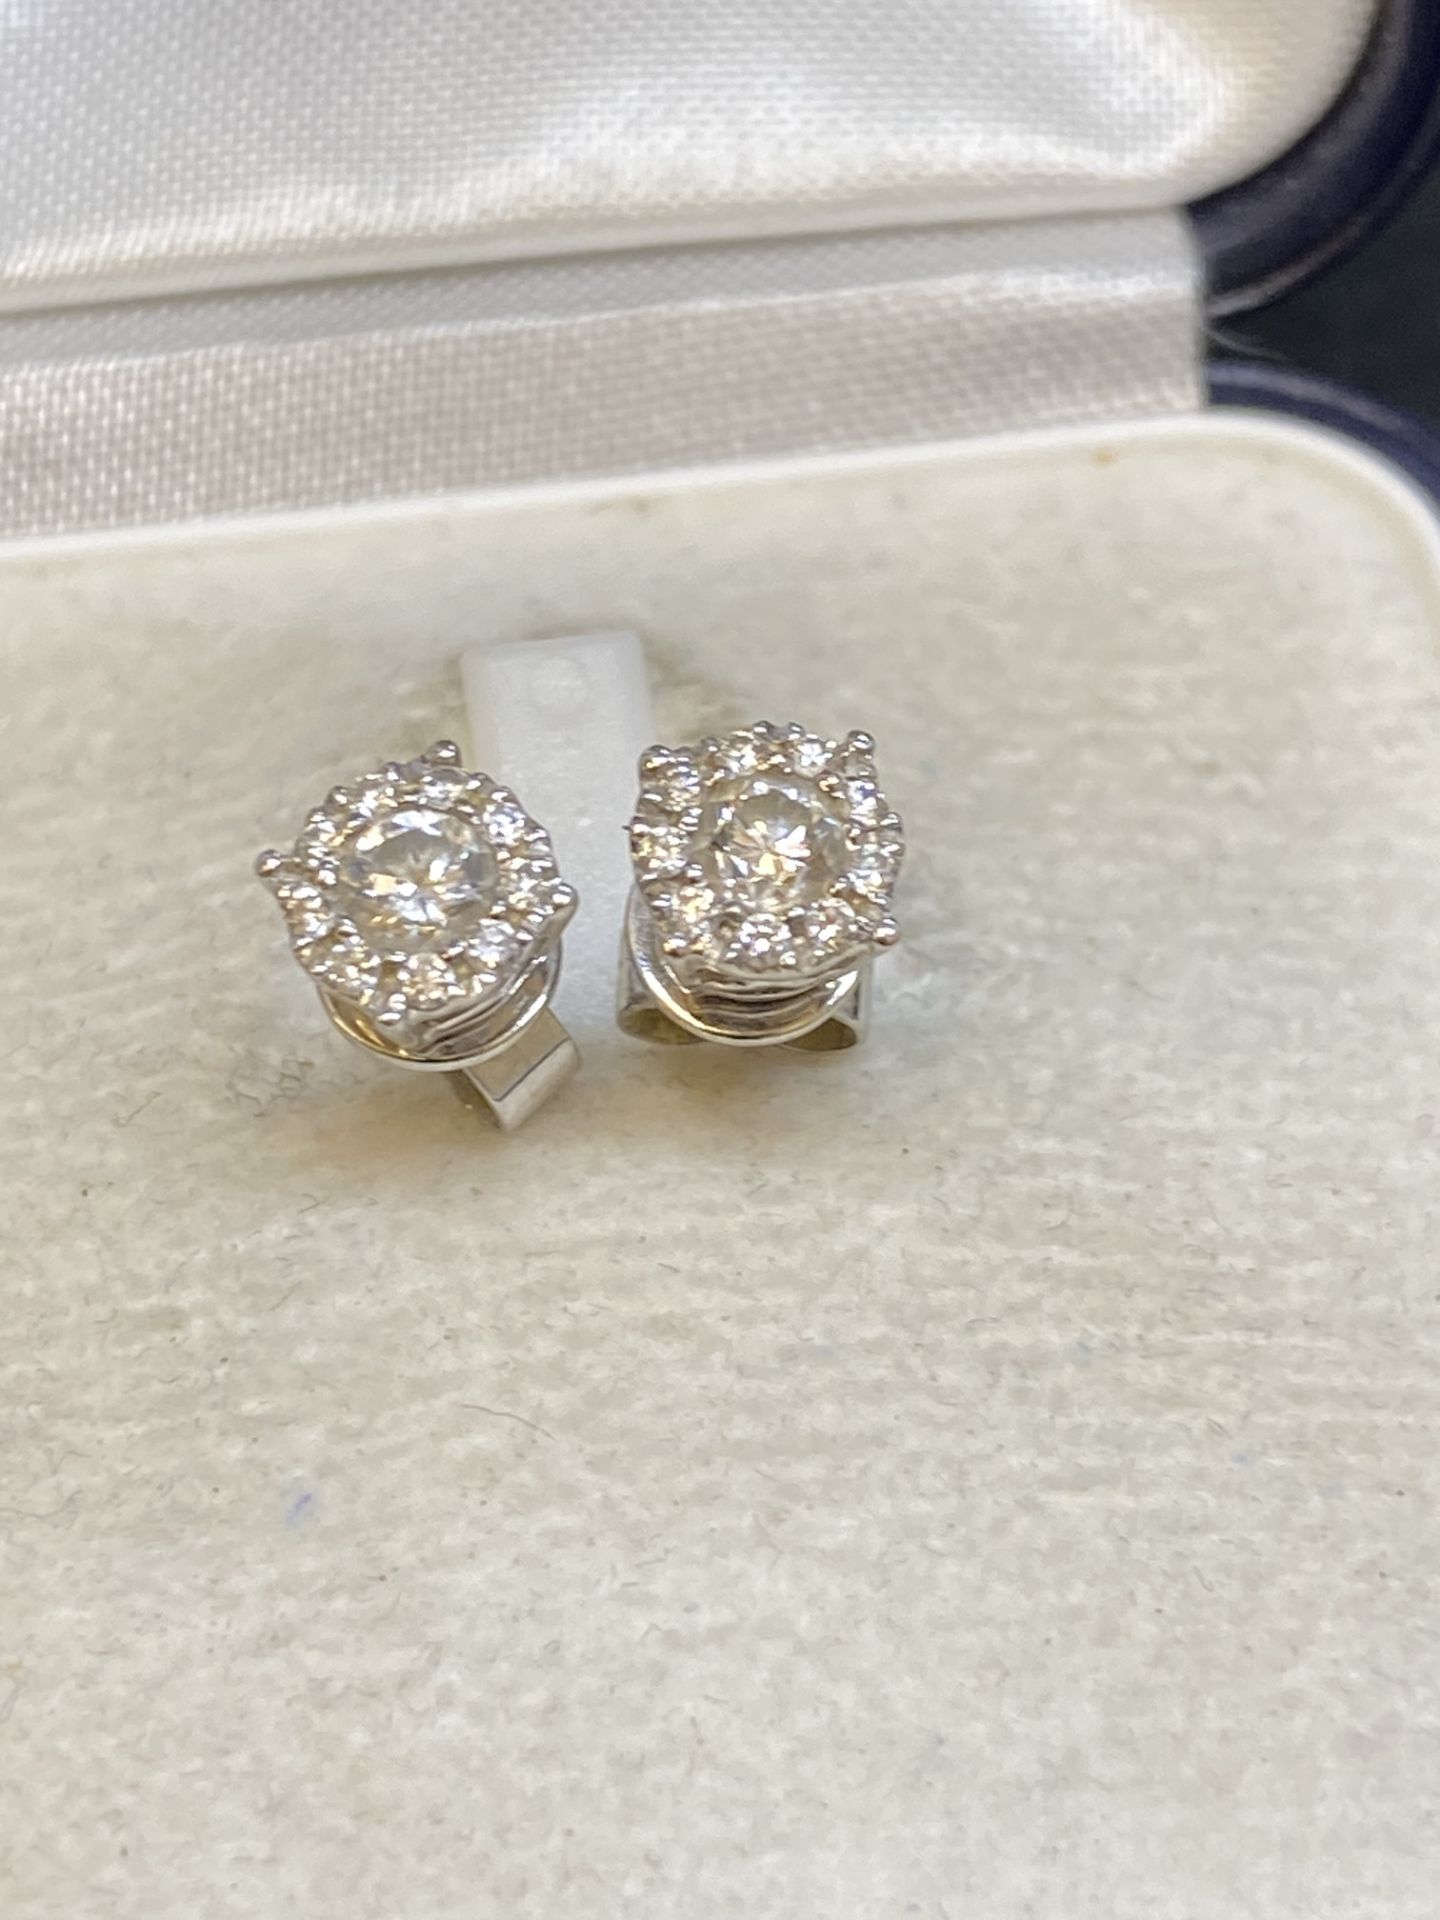 WHITE GOLD 0.40ct DIAMOND EARRINGS - Image 4 of 4